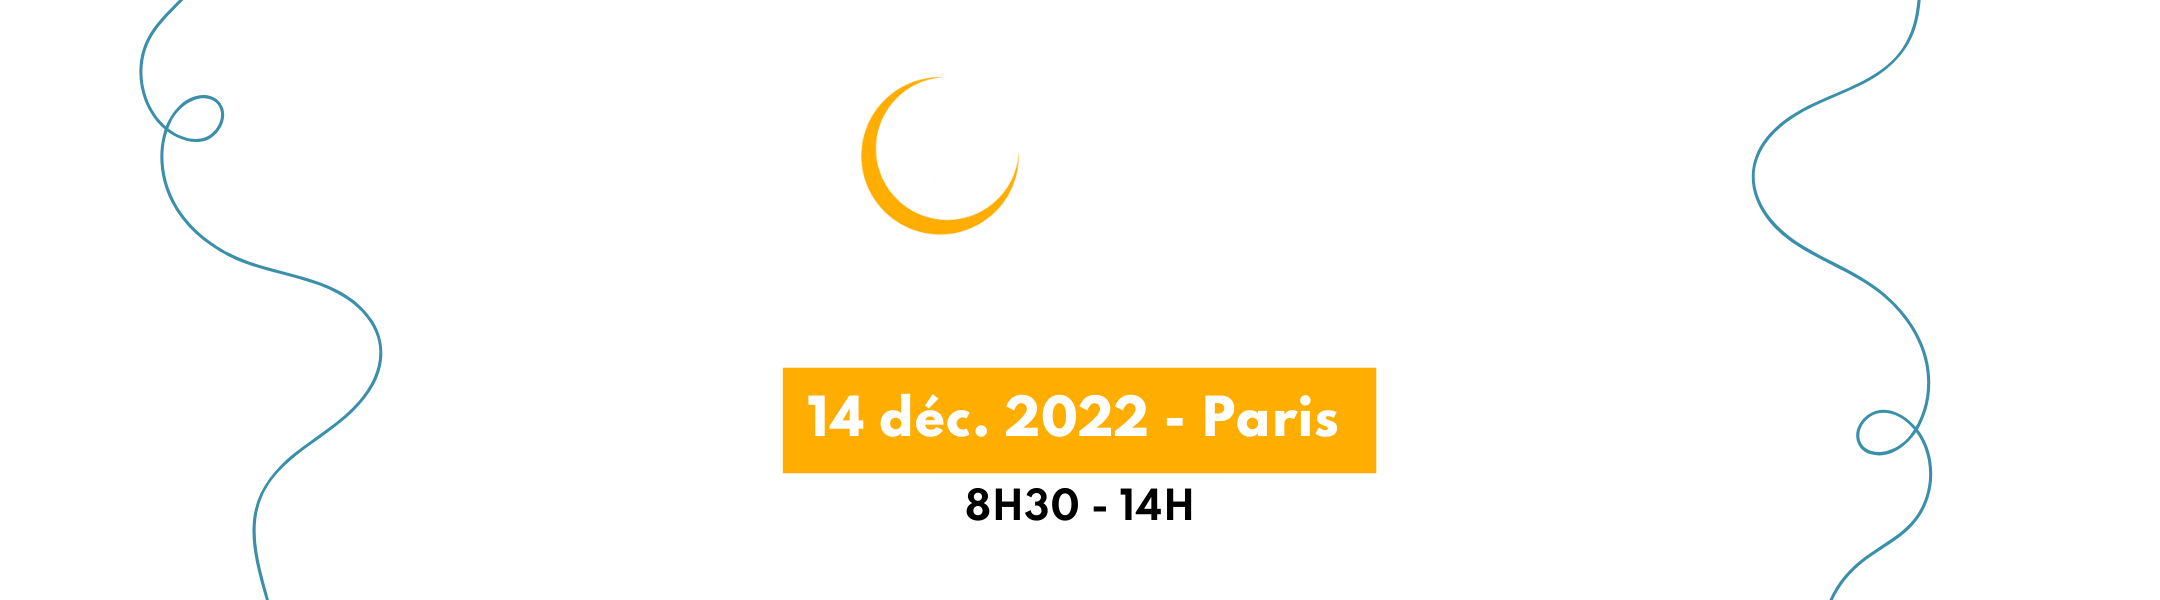 bonial-day-2022